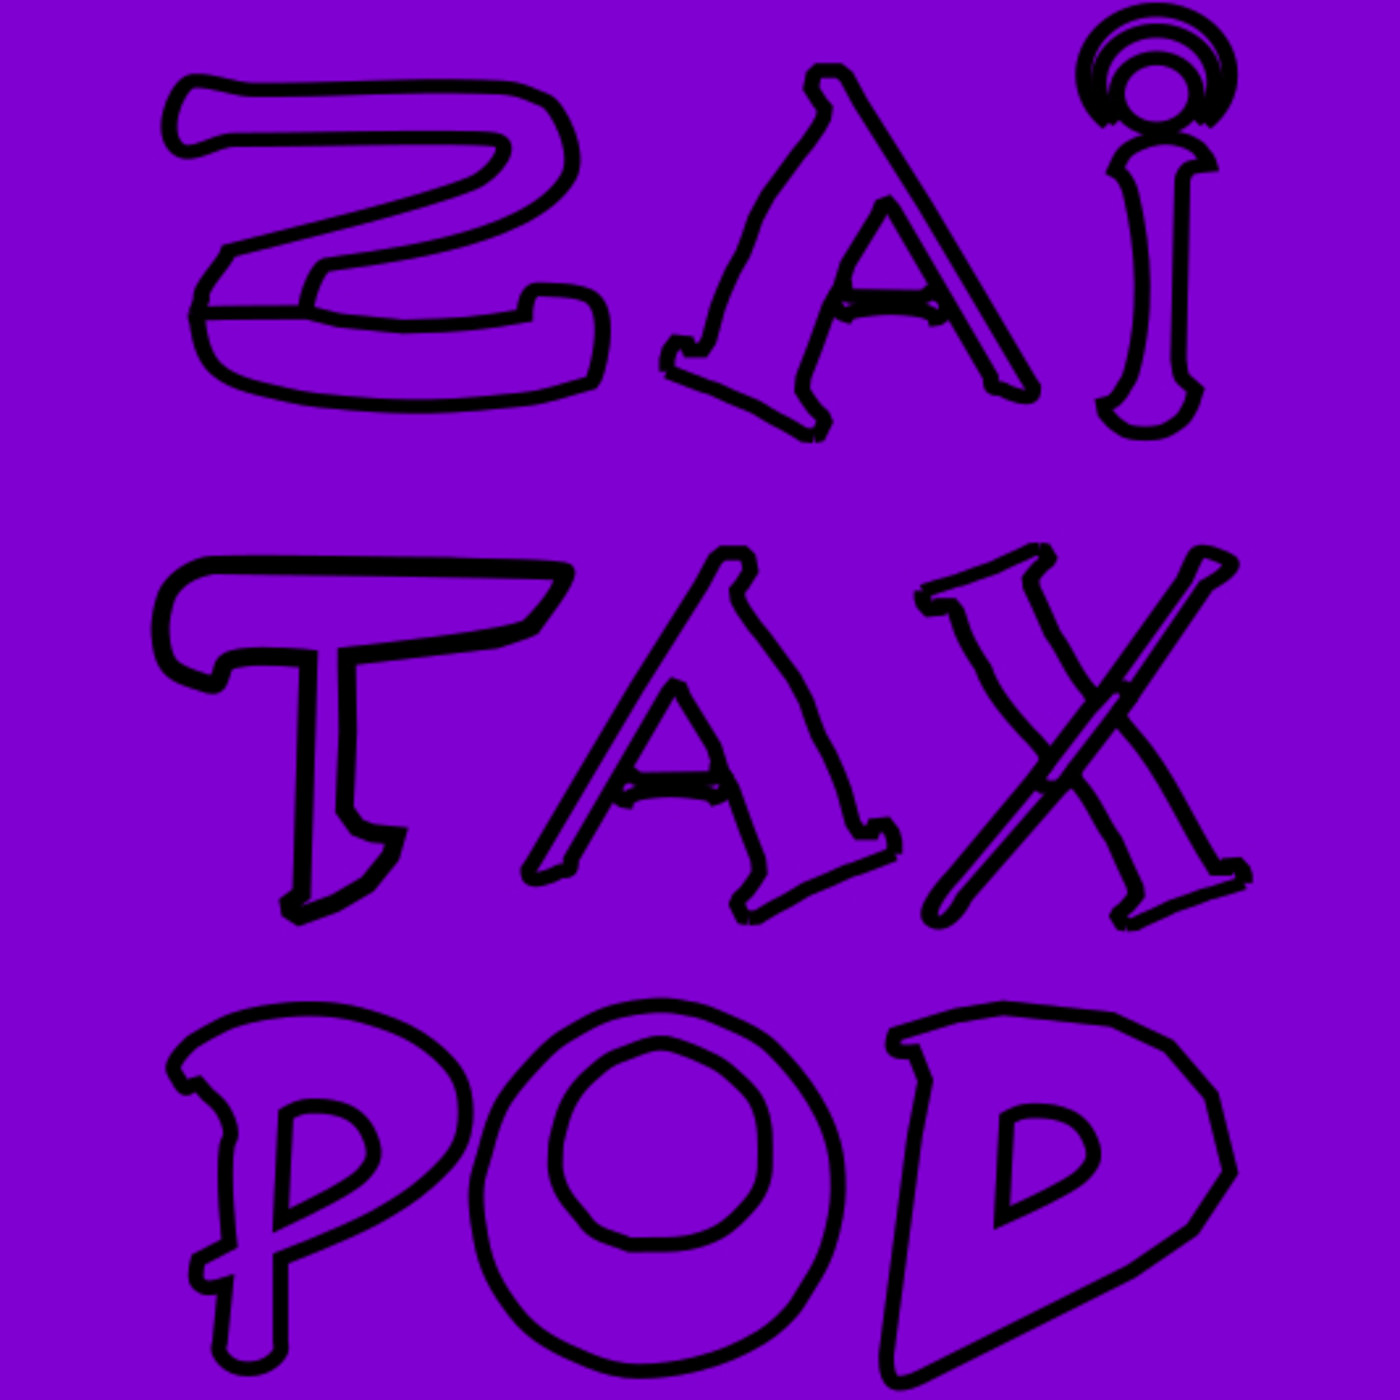 ZaiTax Podcast 7